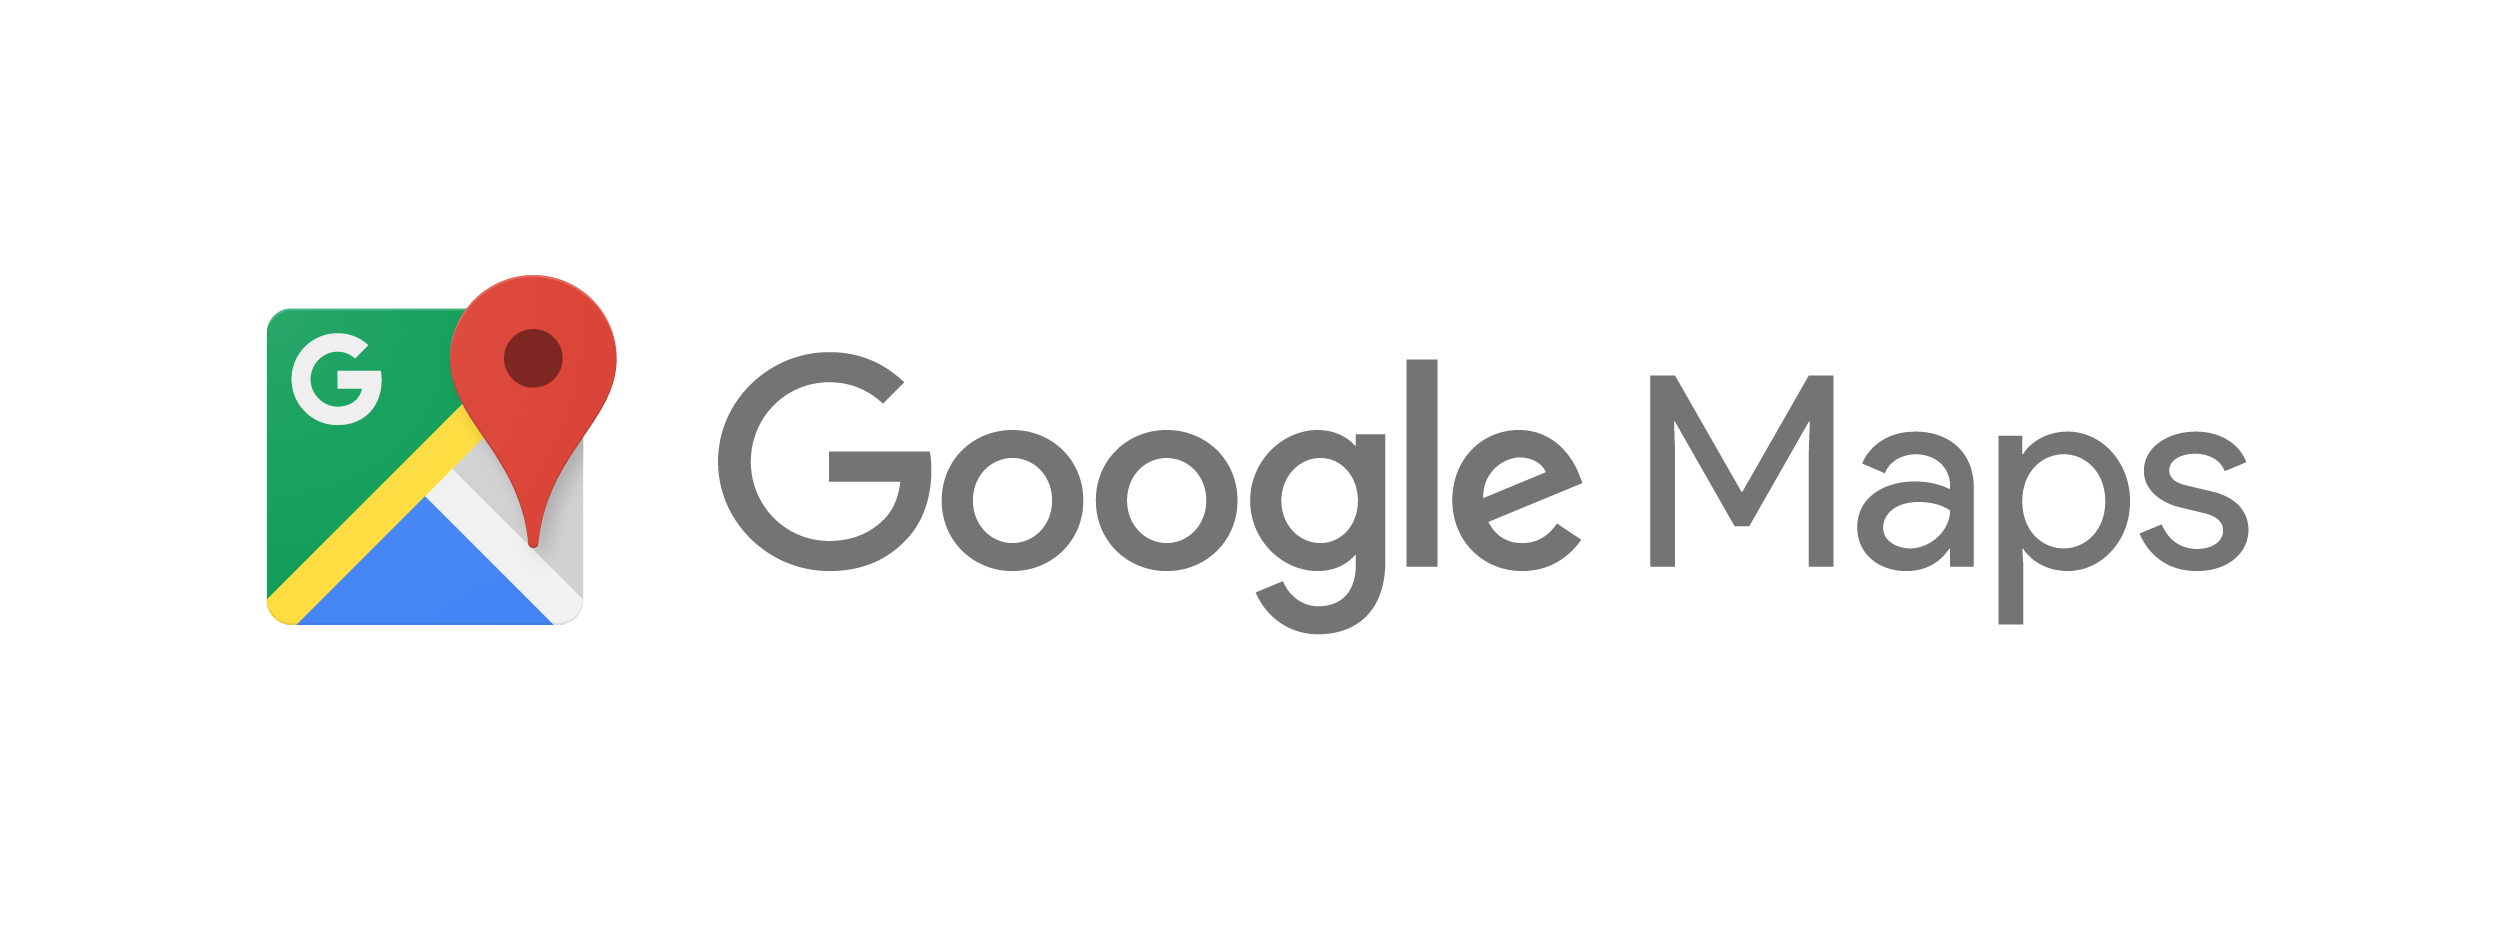 Google Maps Logo - Kisspng Google Maps Google Cloud Platform G Suite Logo Google